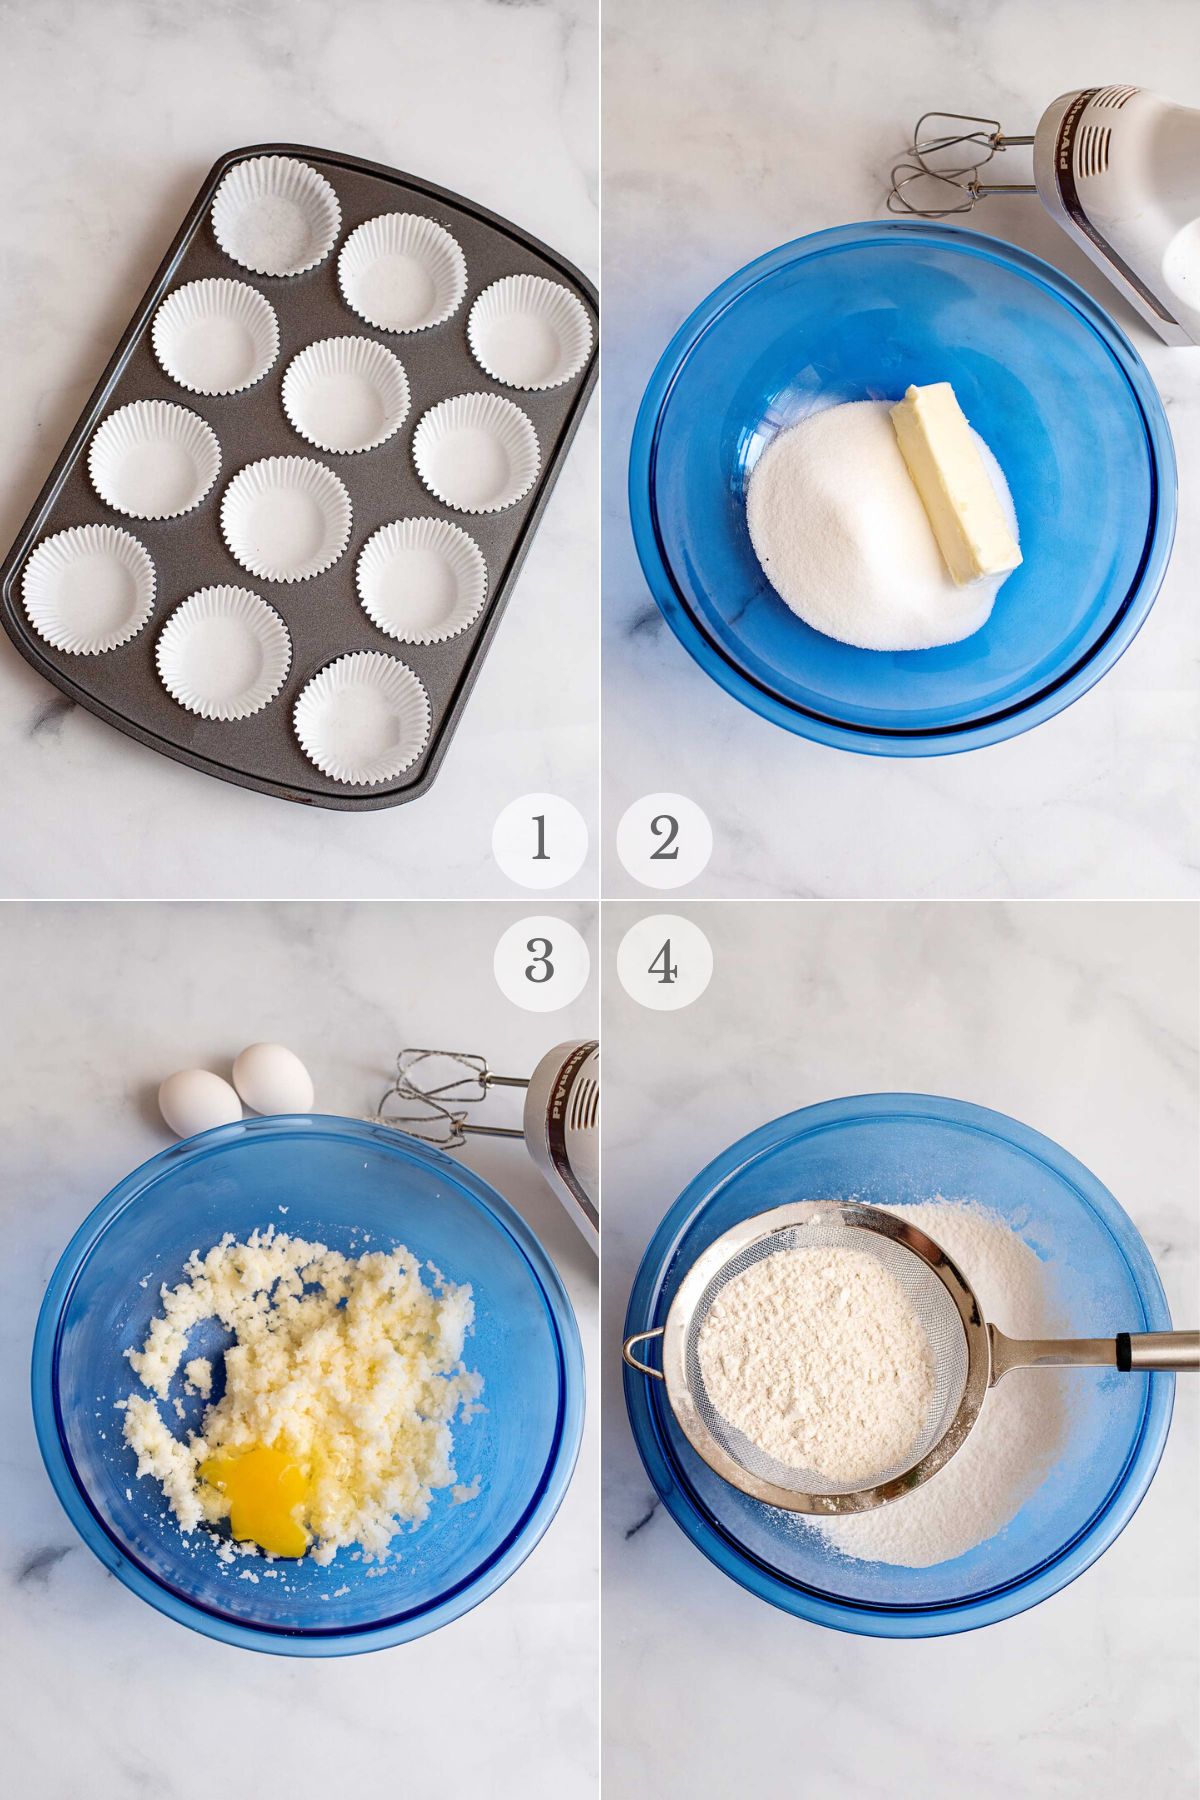 yellow cupcakes recipe steps 1-4.